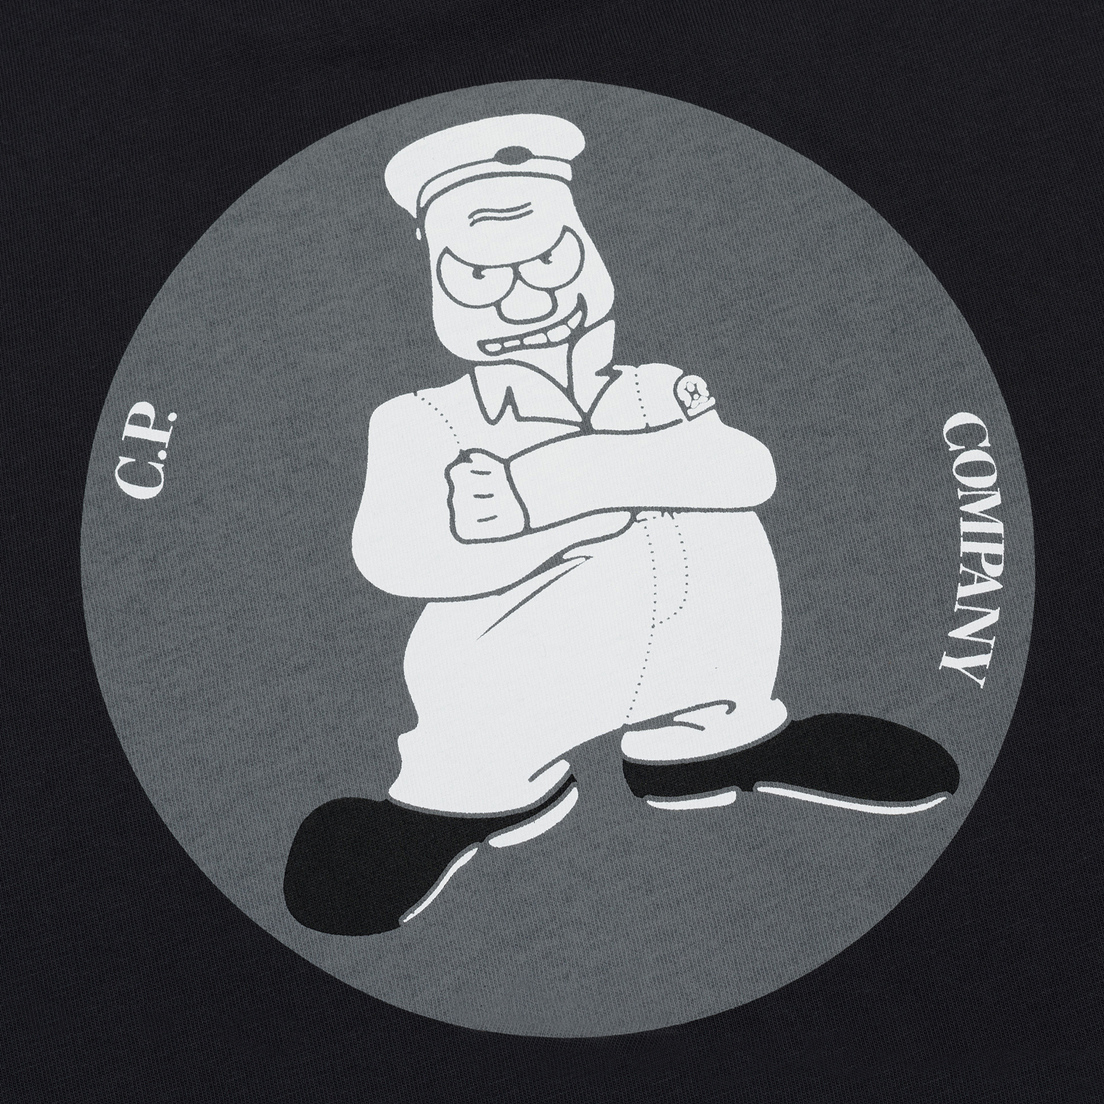 C.P. Company Мужская футболка Crew Neck Front Logo